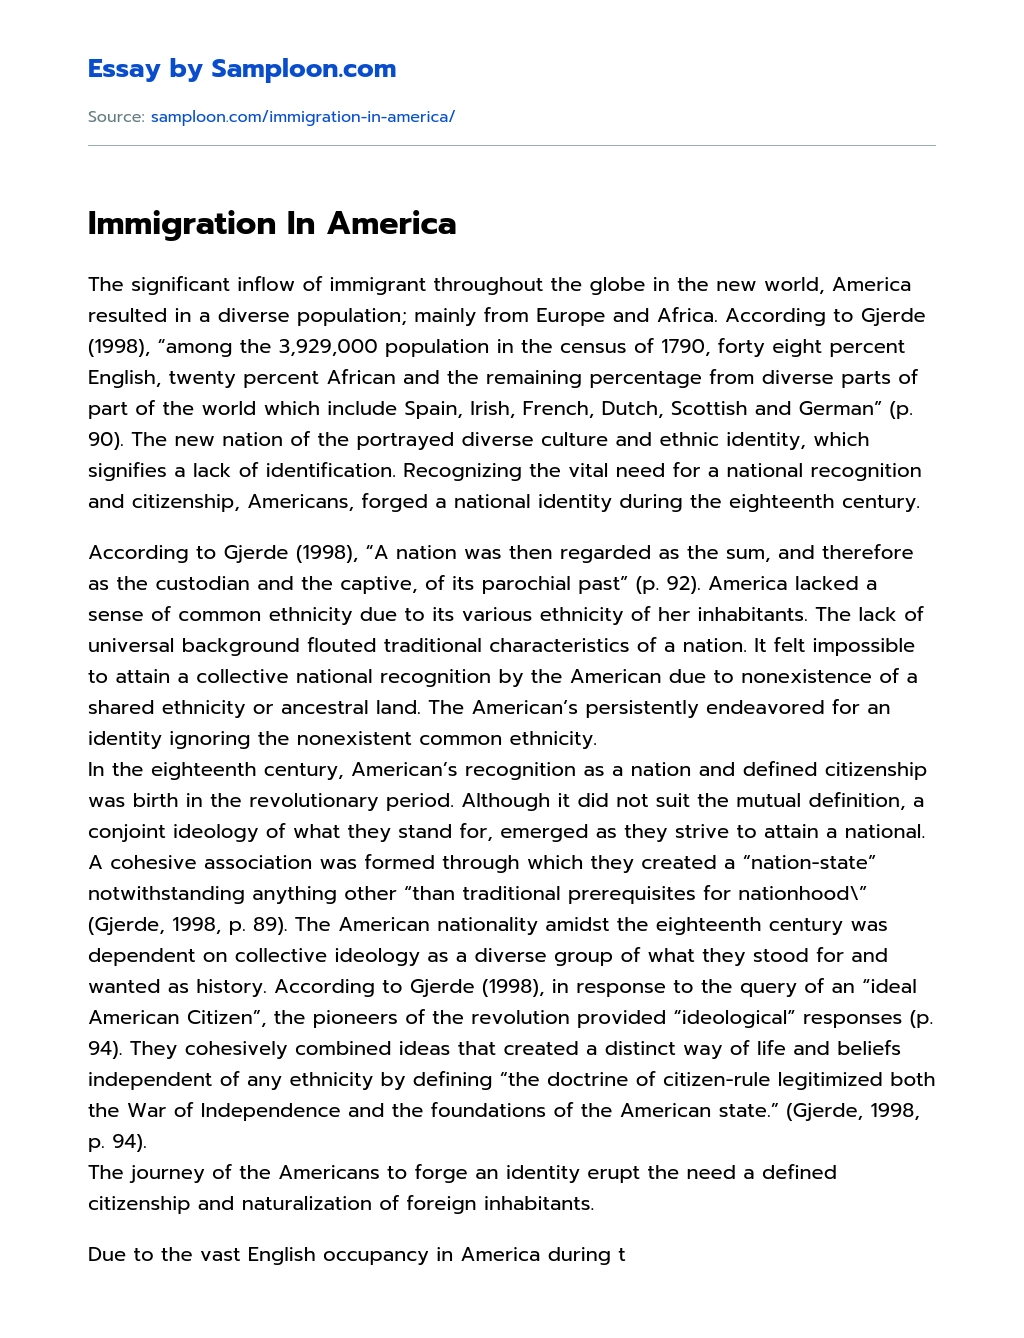 Immigration In America essay